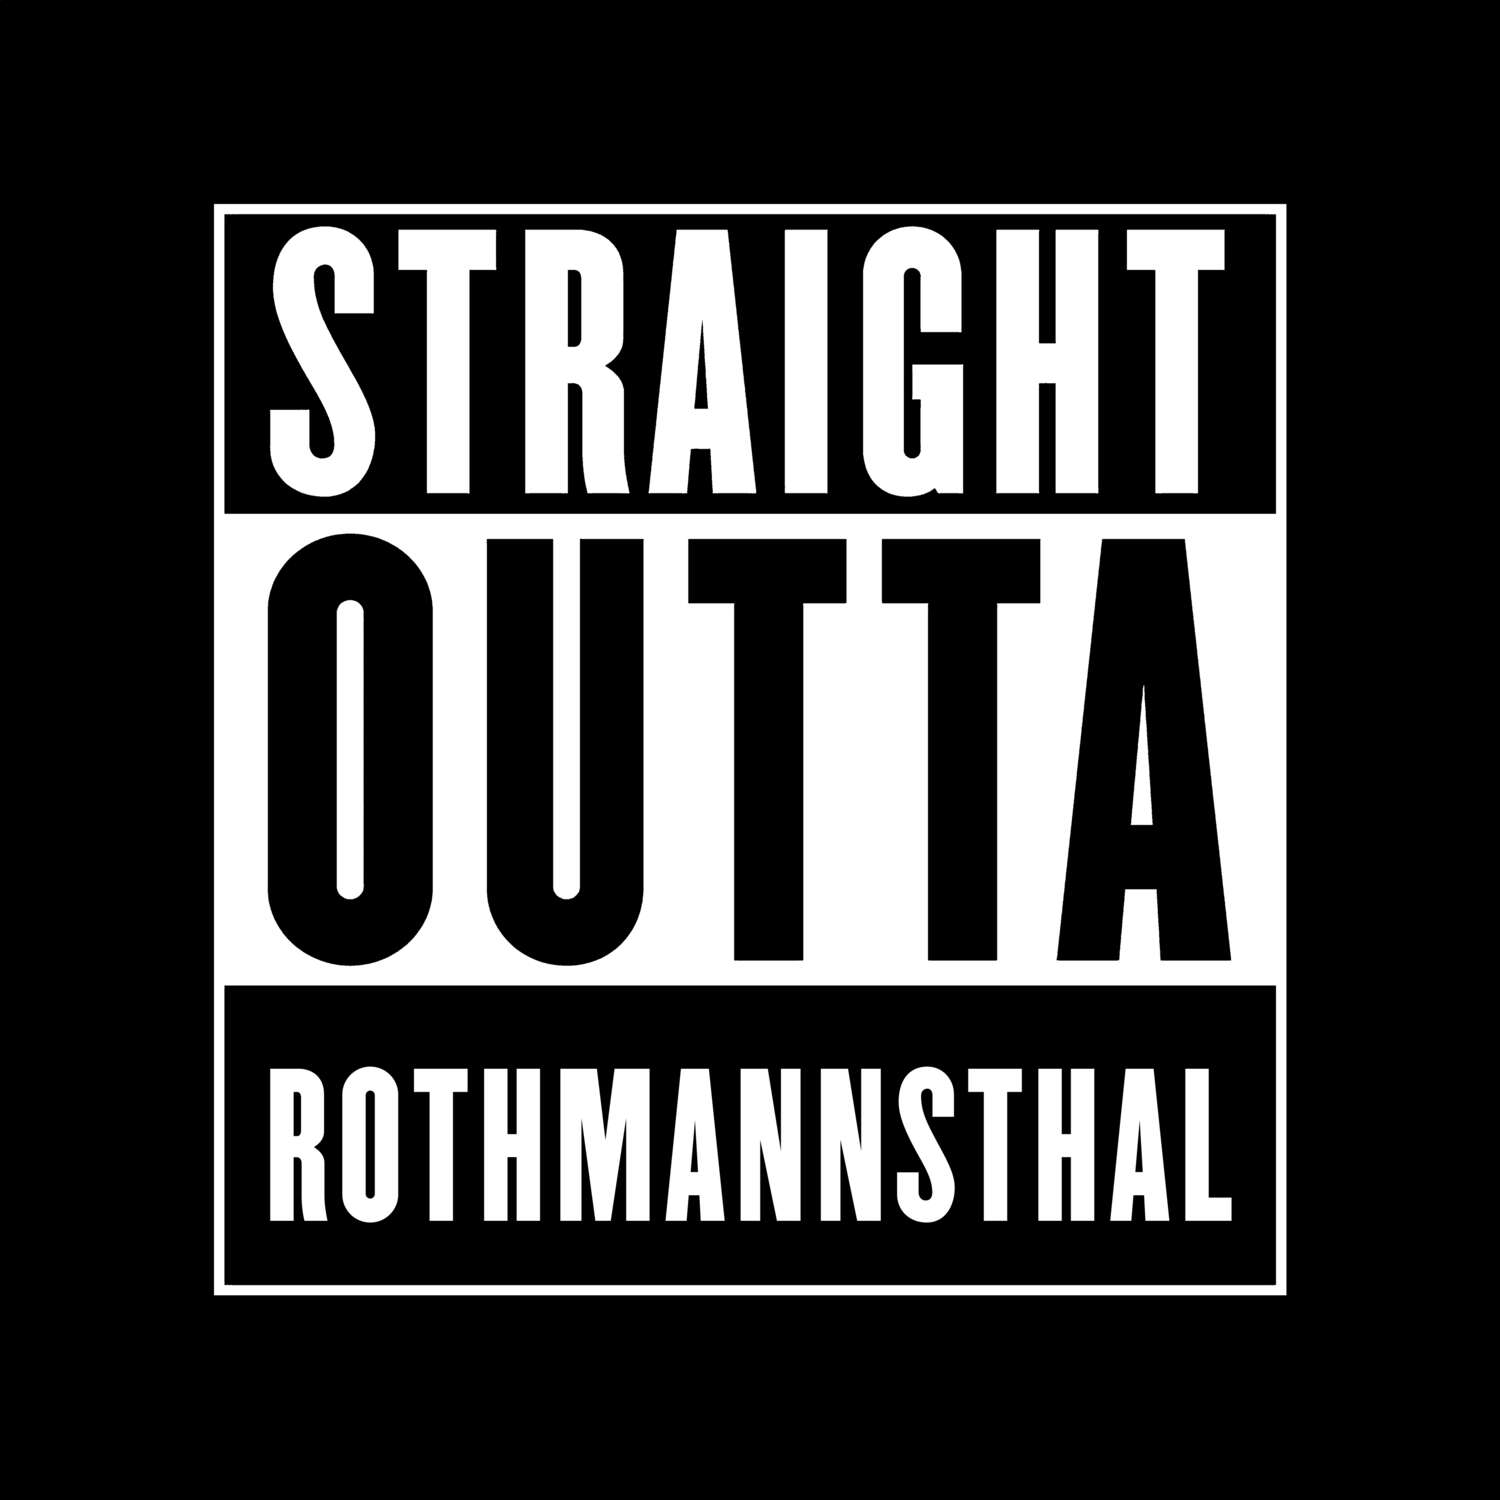 Rothmannsthal T-Shirt »Straight Outta«